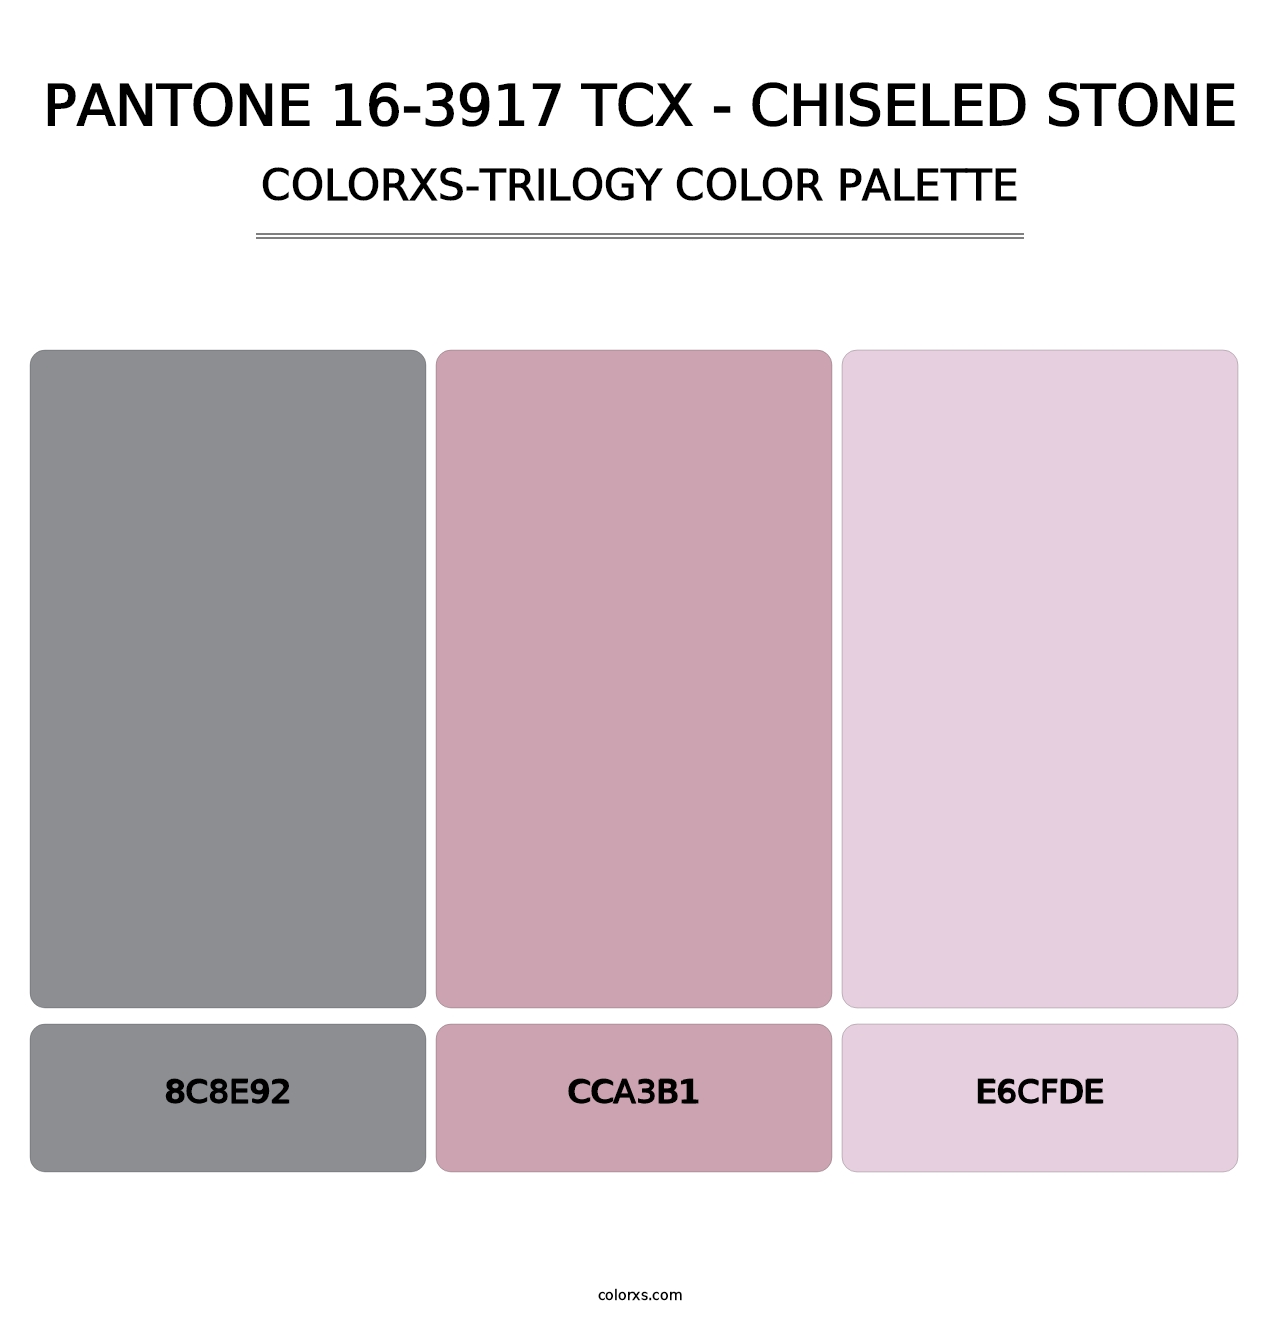 PANTONE 16-3917 TCX - Chiseled Stone - Colorxs Trilogy Palette